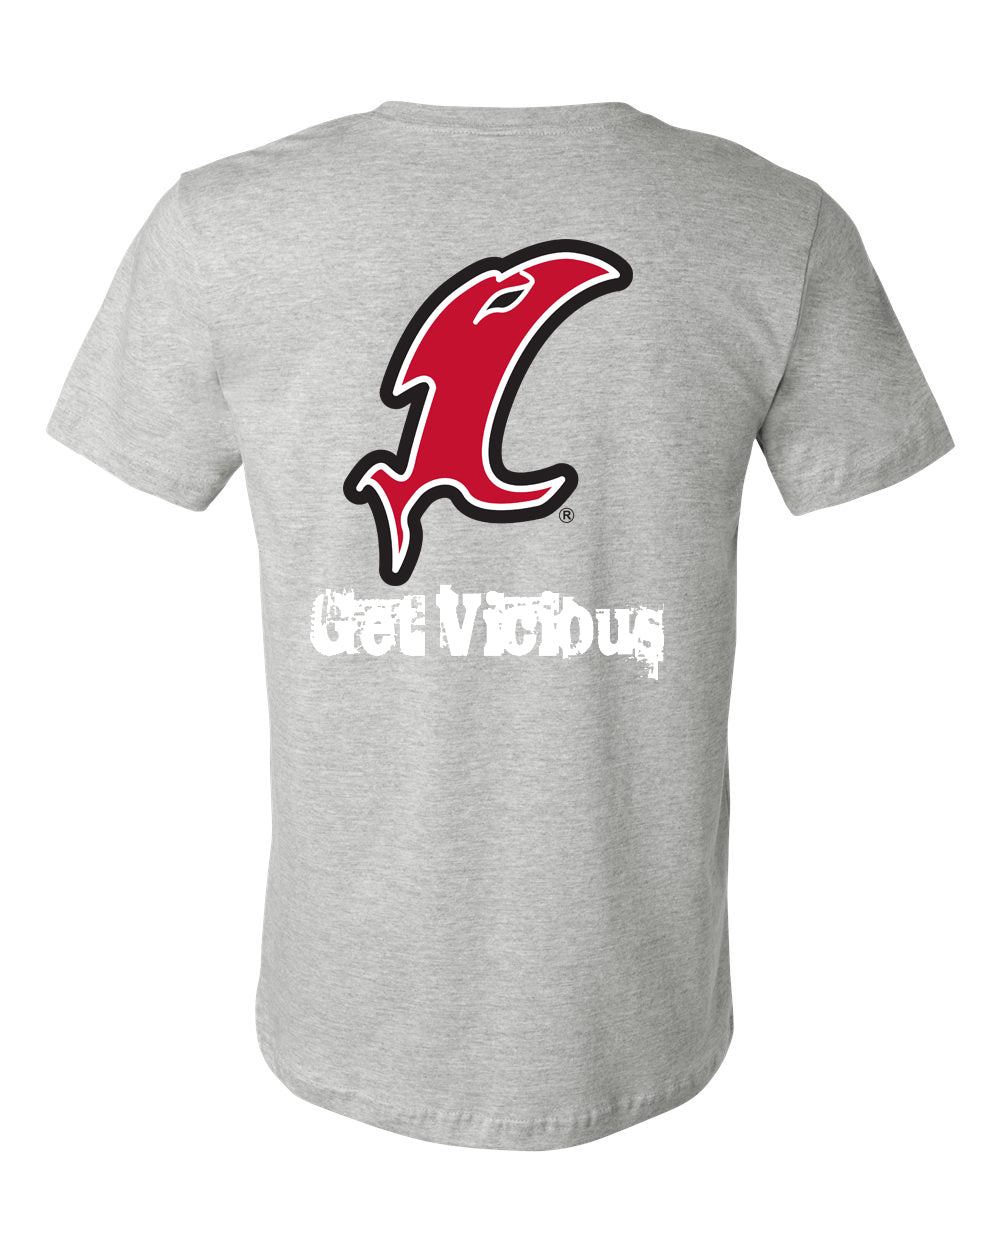 Vicious Classic "Get Vicious" Logo Tee - Gray